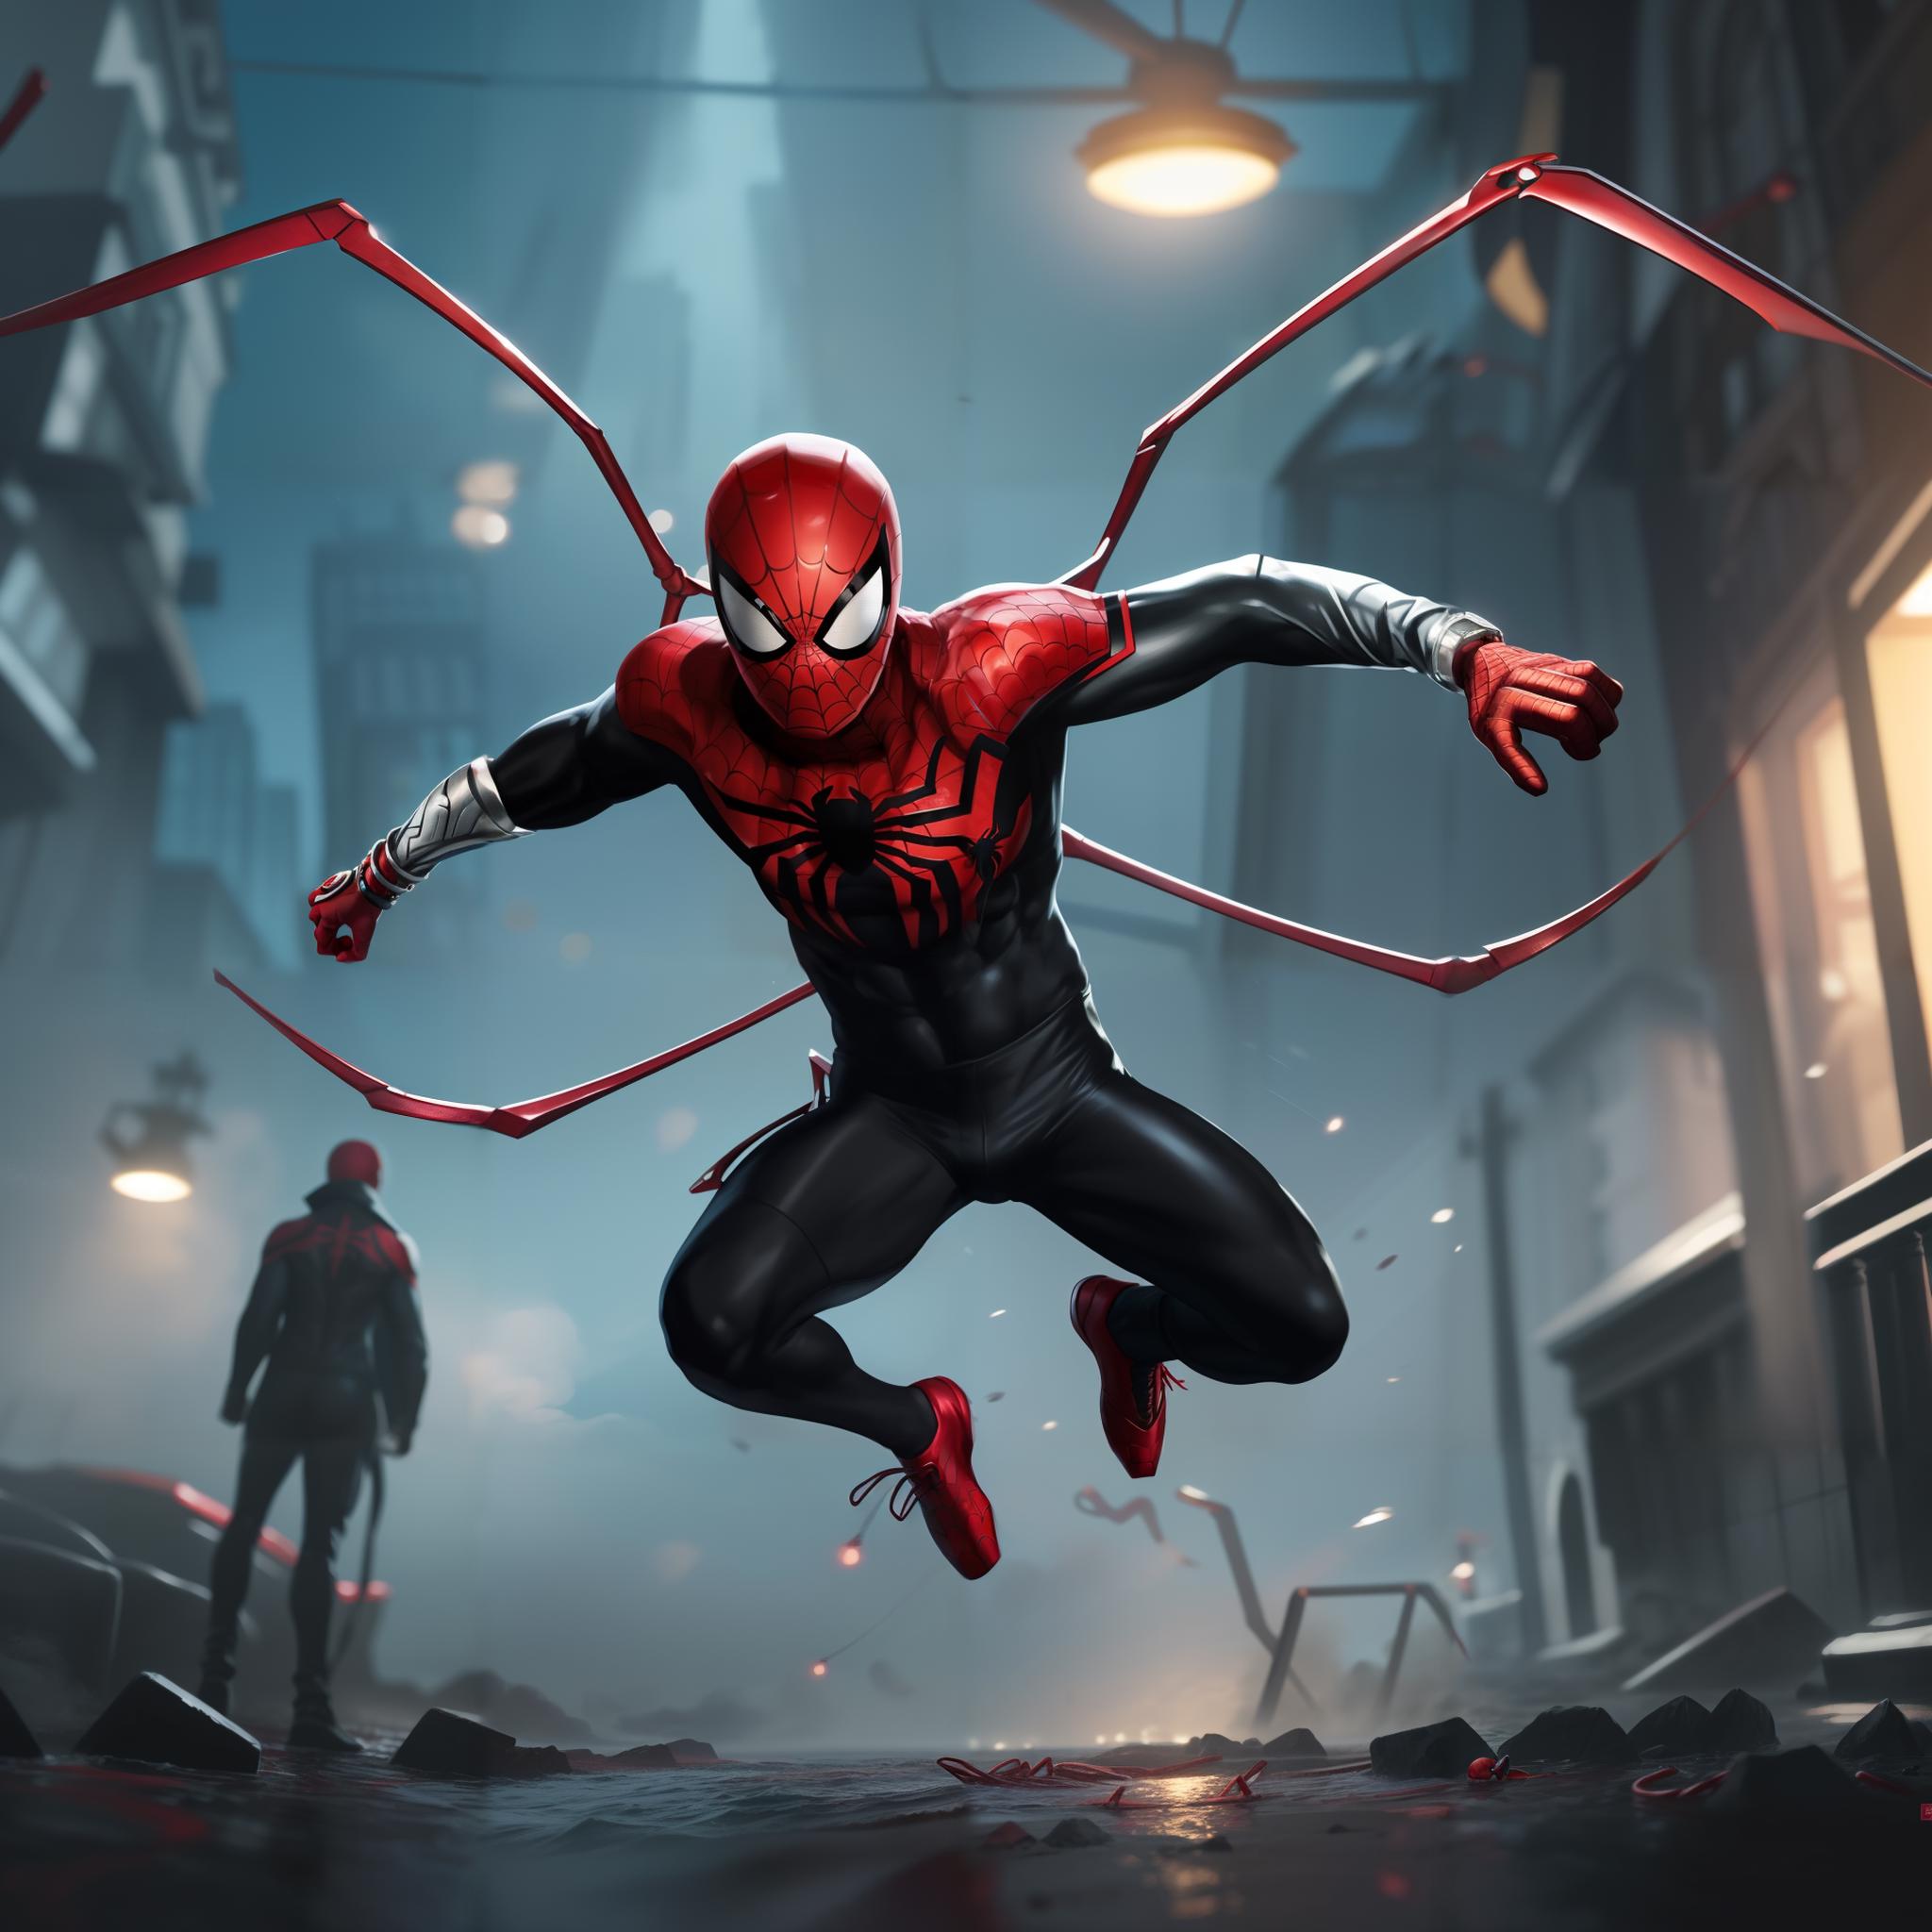 Superior Spider-man image by sajeas